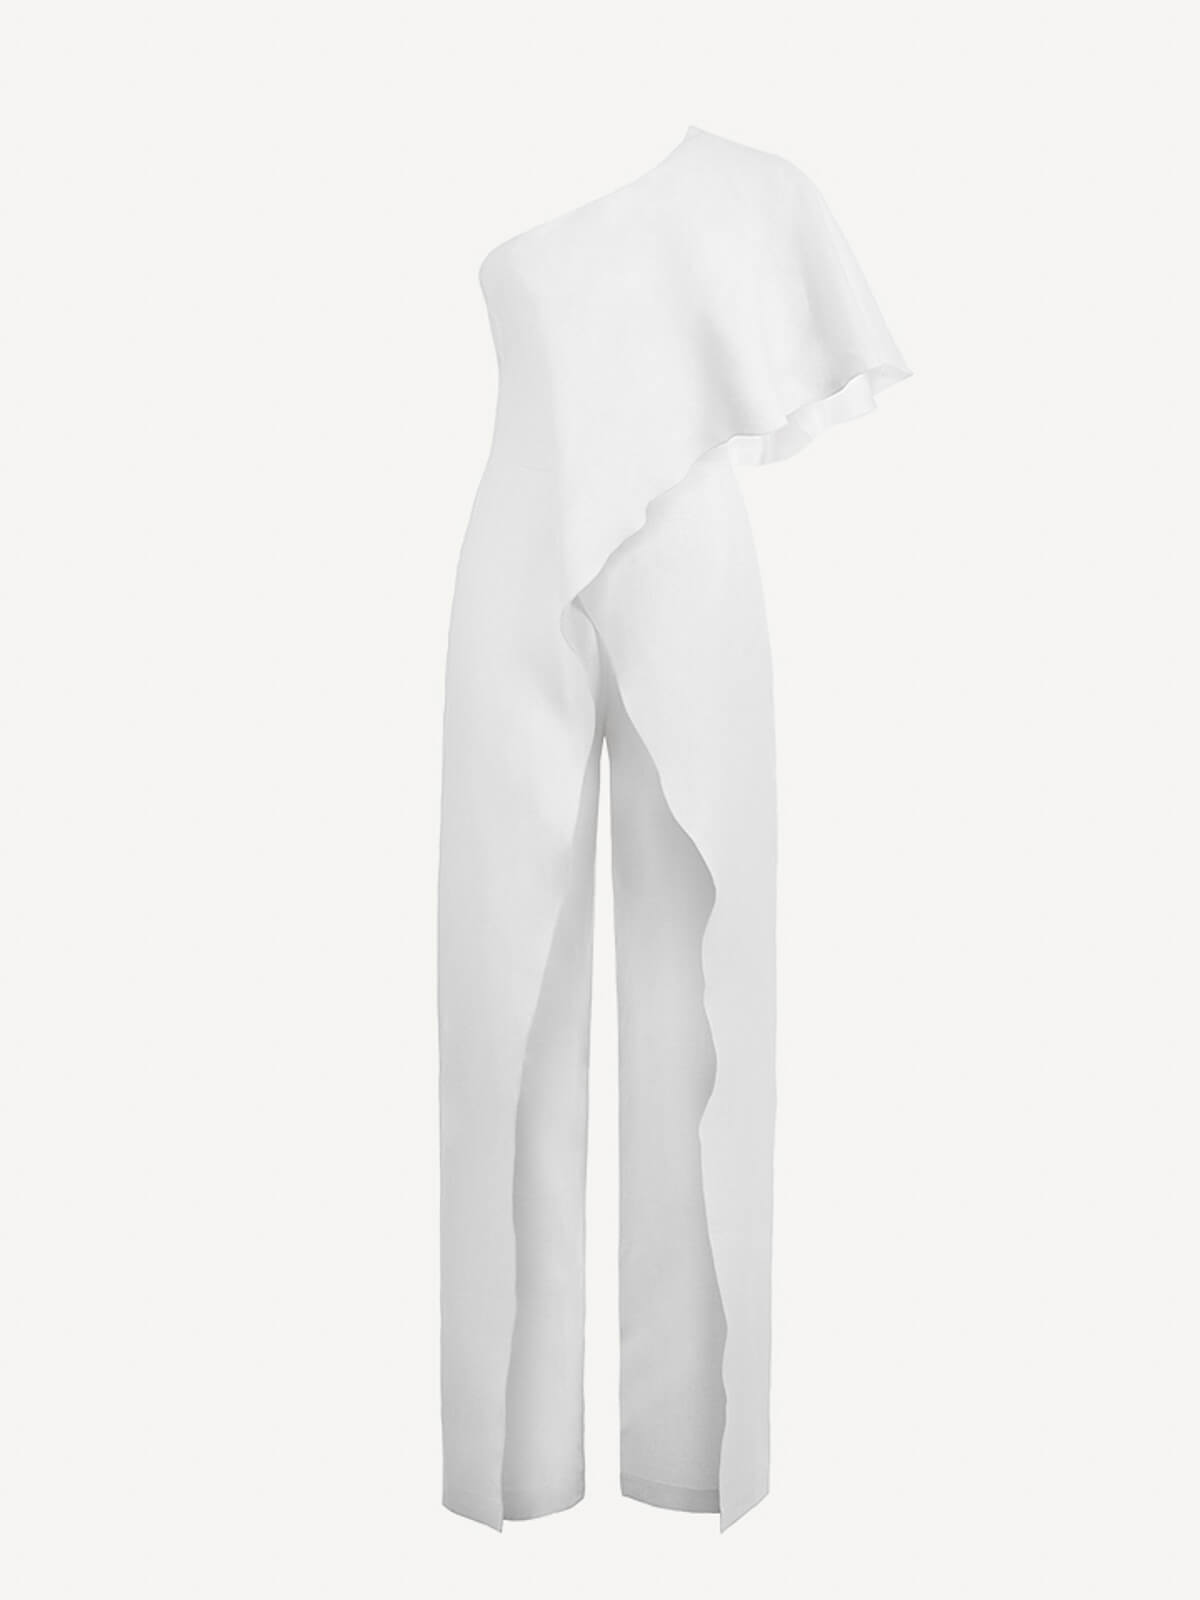 Jumpsuit Tuta Allegra 100% Capri white linen jumpsuit front